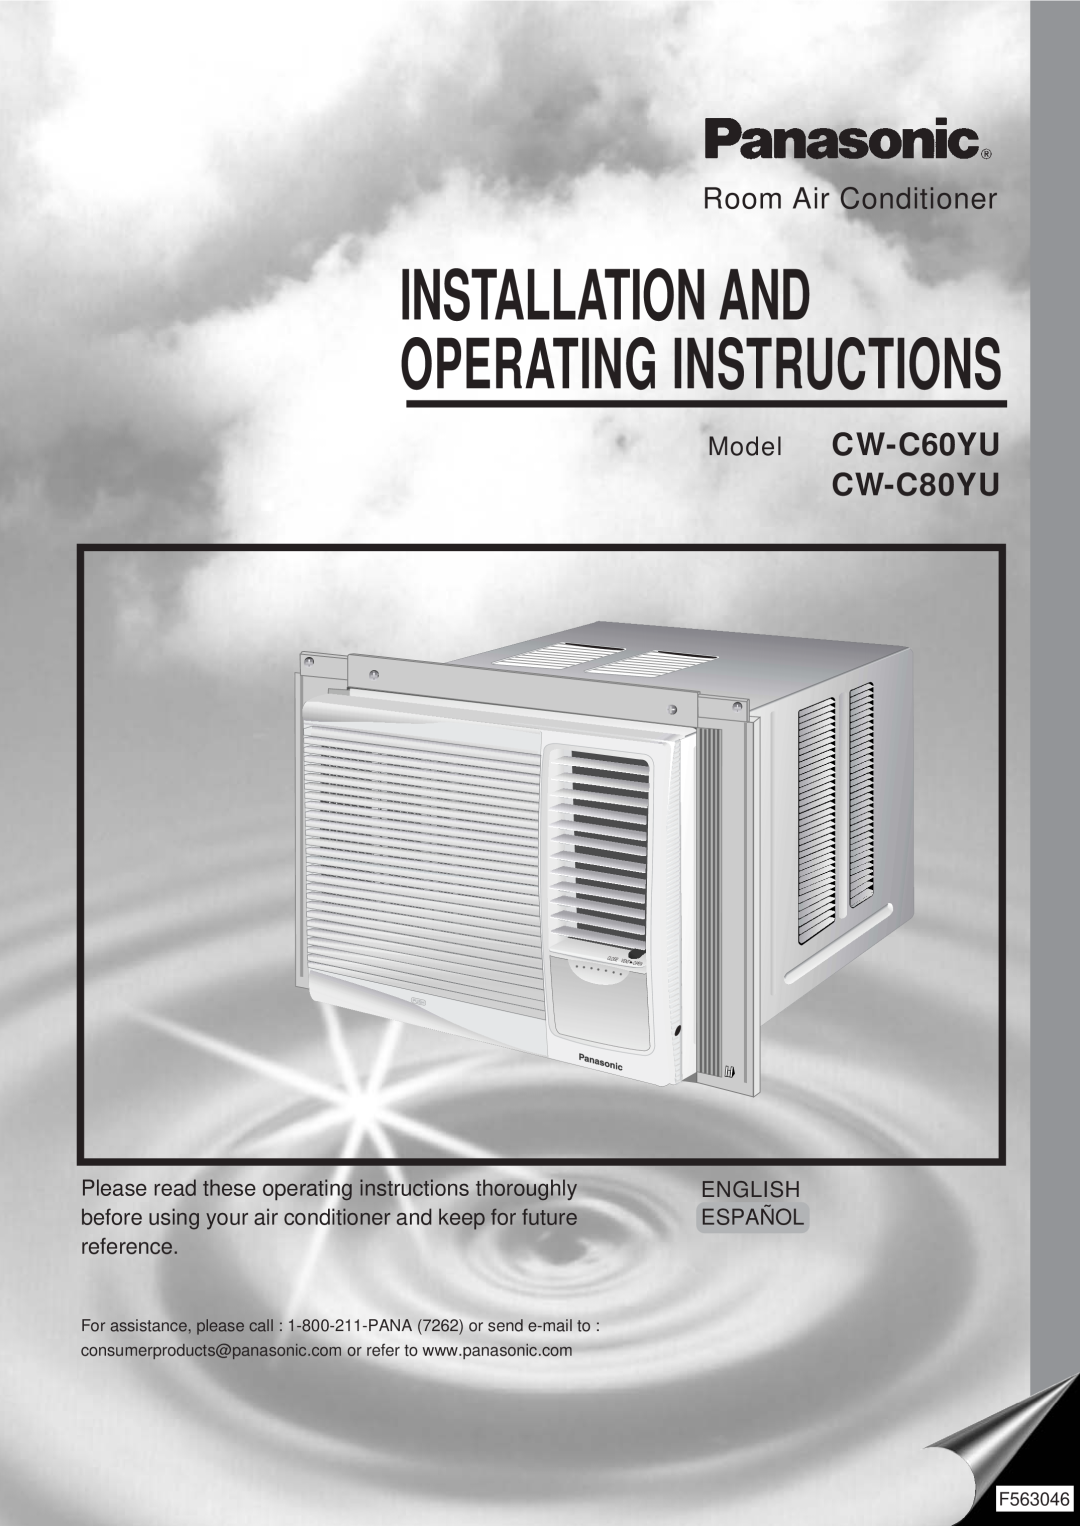 Panasonic operating instructions Installation And Operating Instructions, Model CW-C60YU CW-C80YU, Room Air Conditioner 